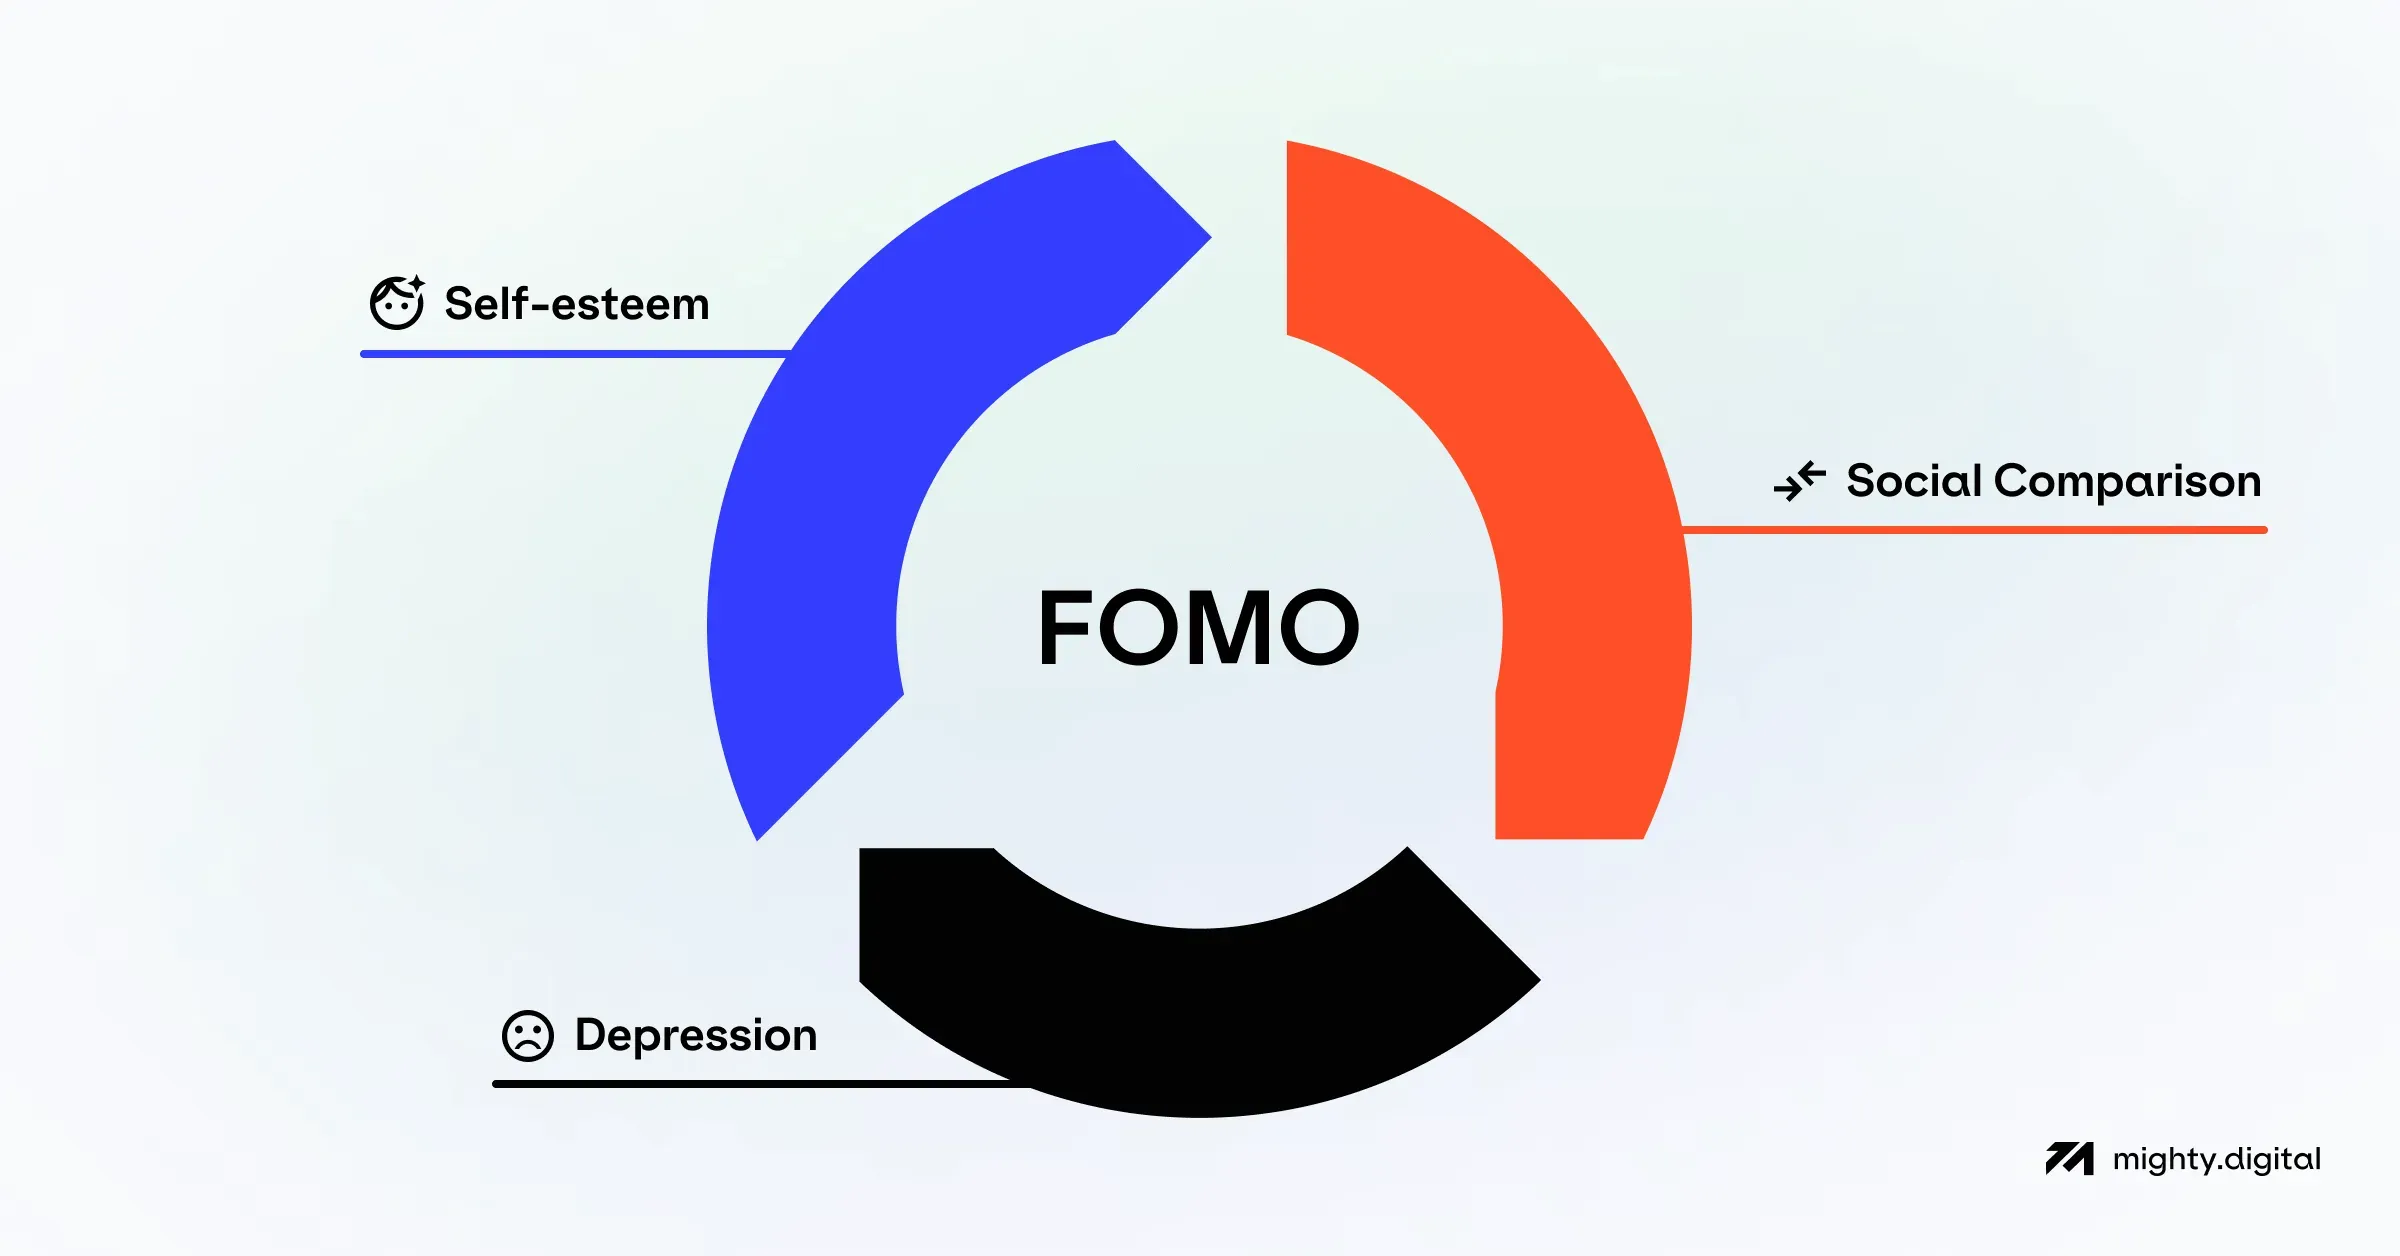 FOMO’s associations